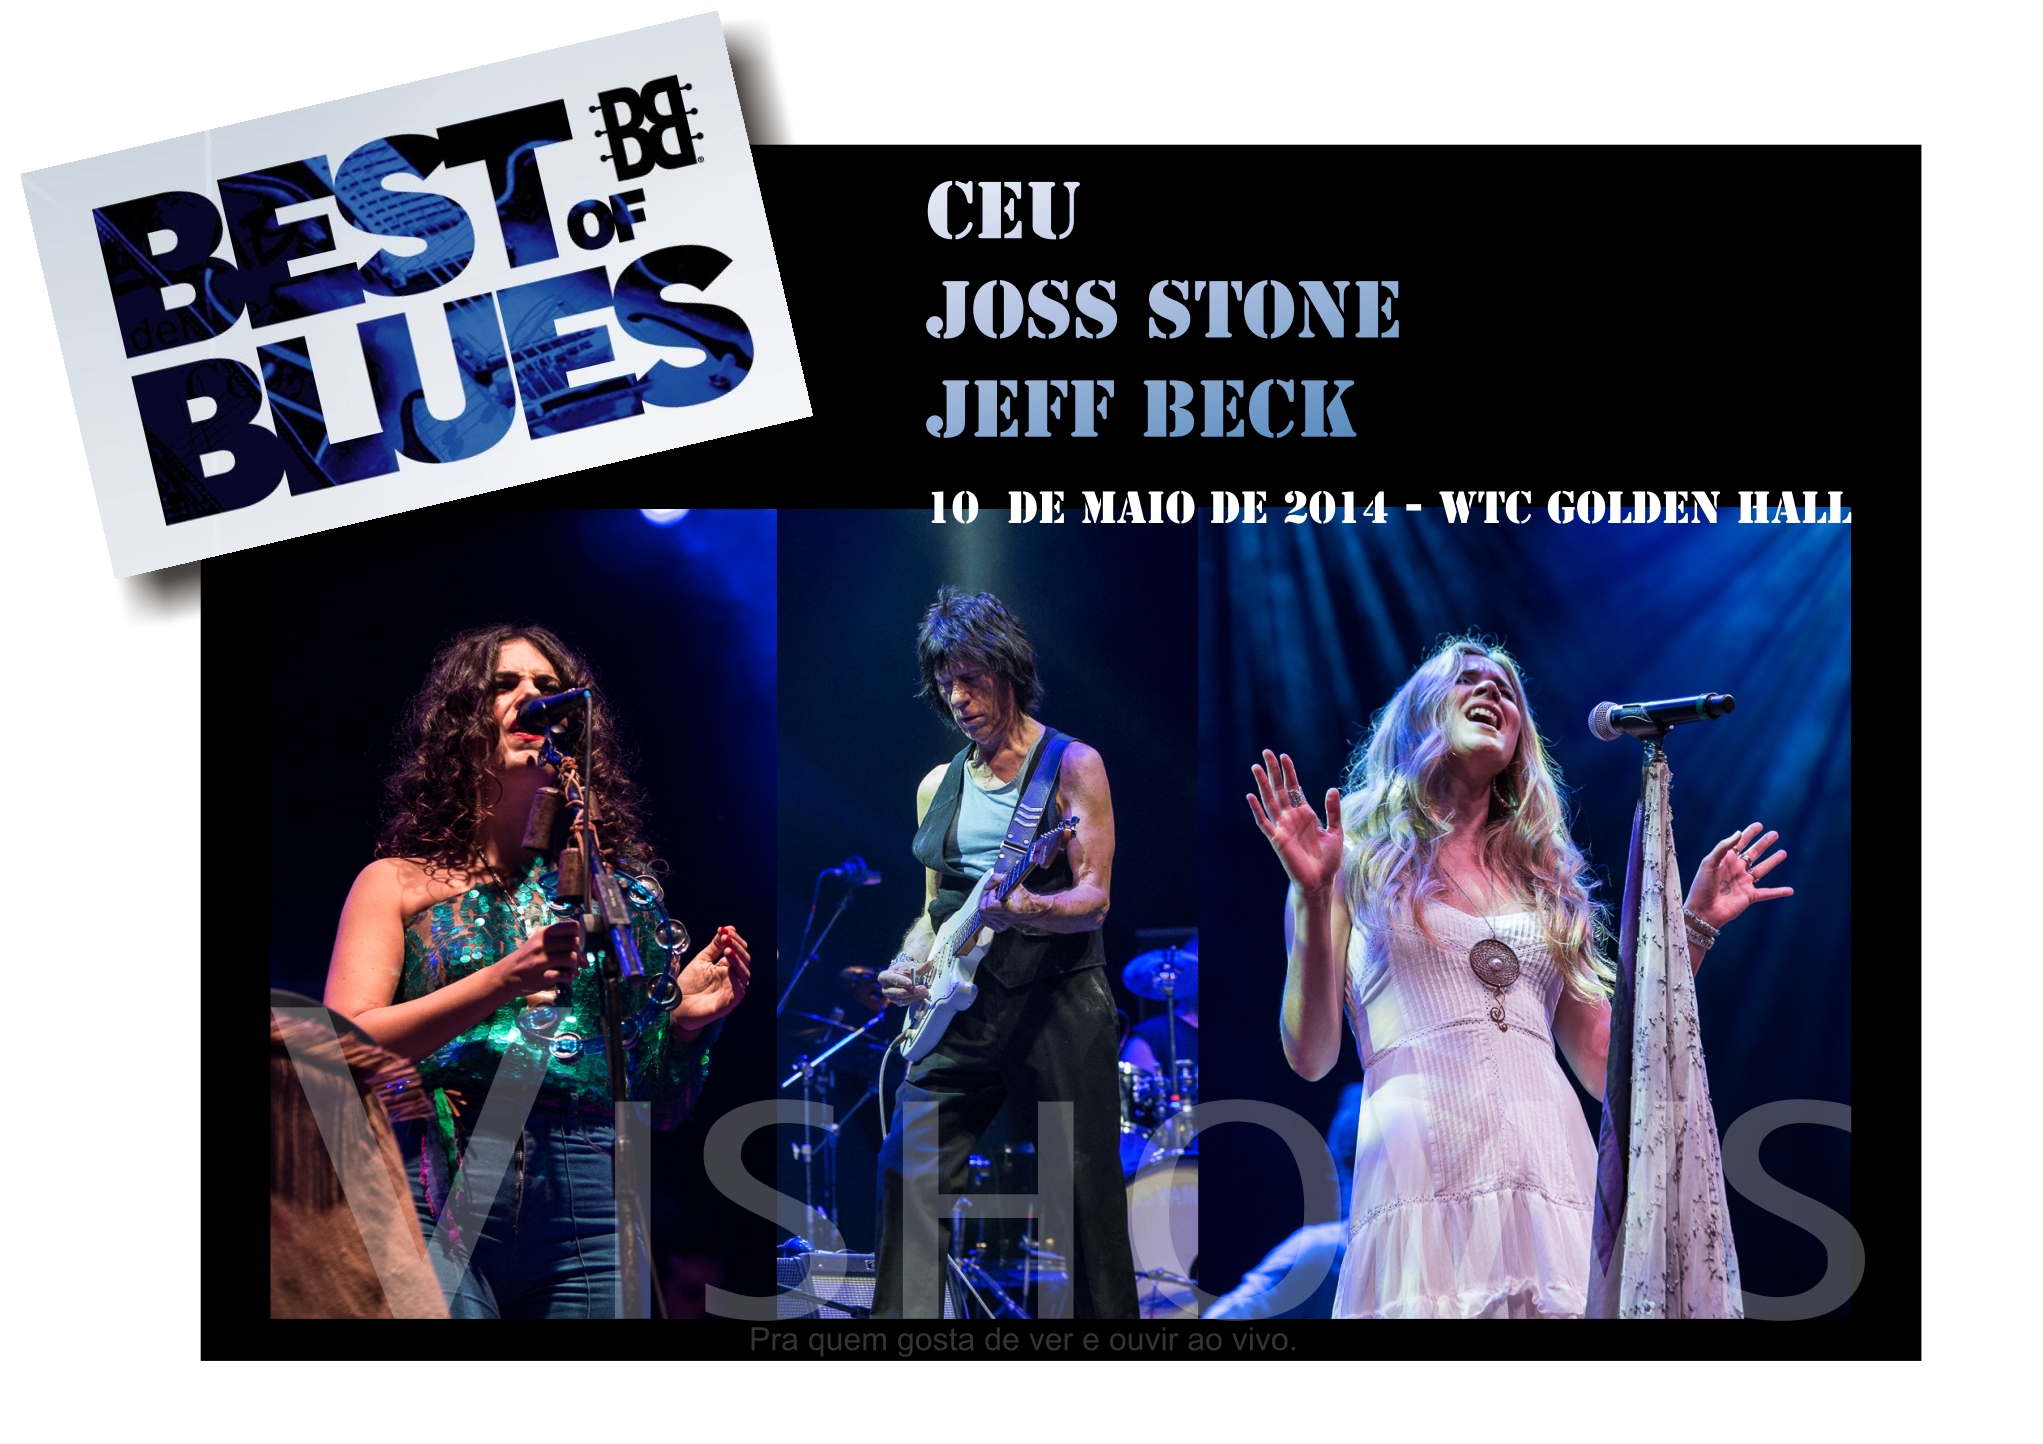 Jeff Beck, Joss Stone e Céu no Best of Blues Festival 2014